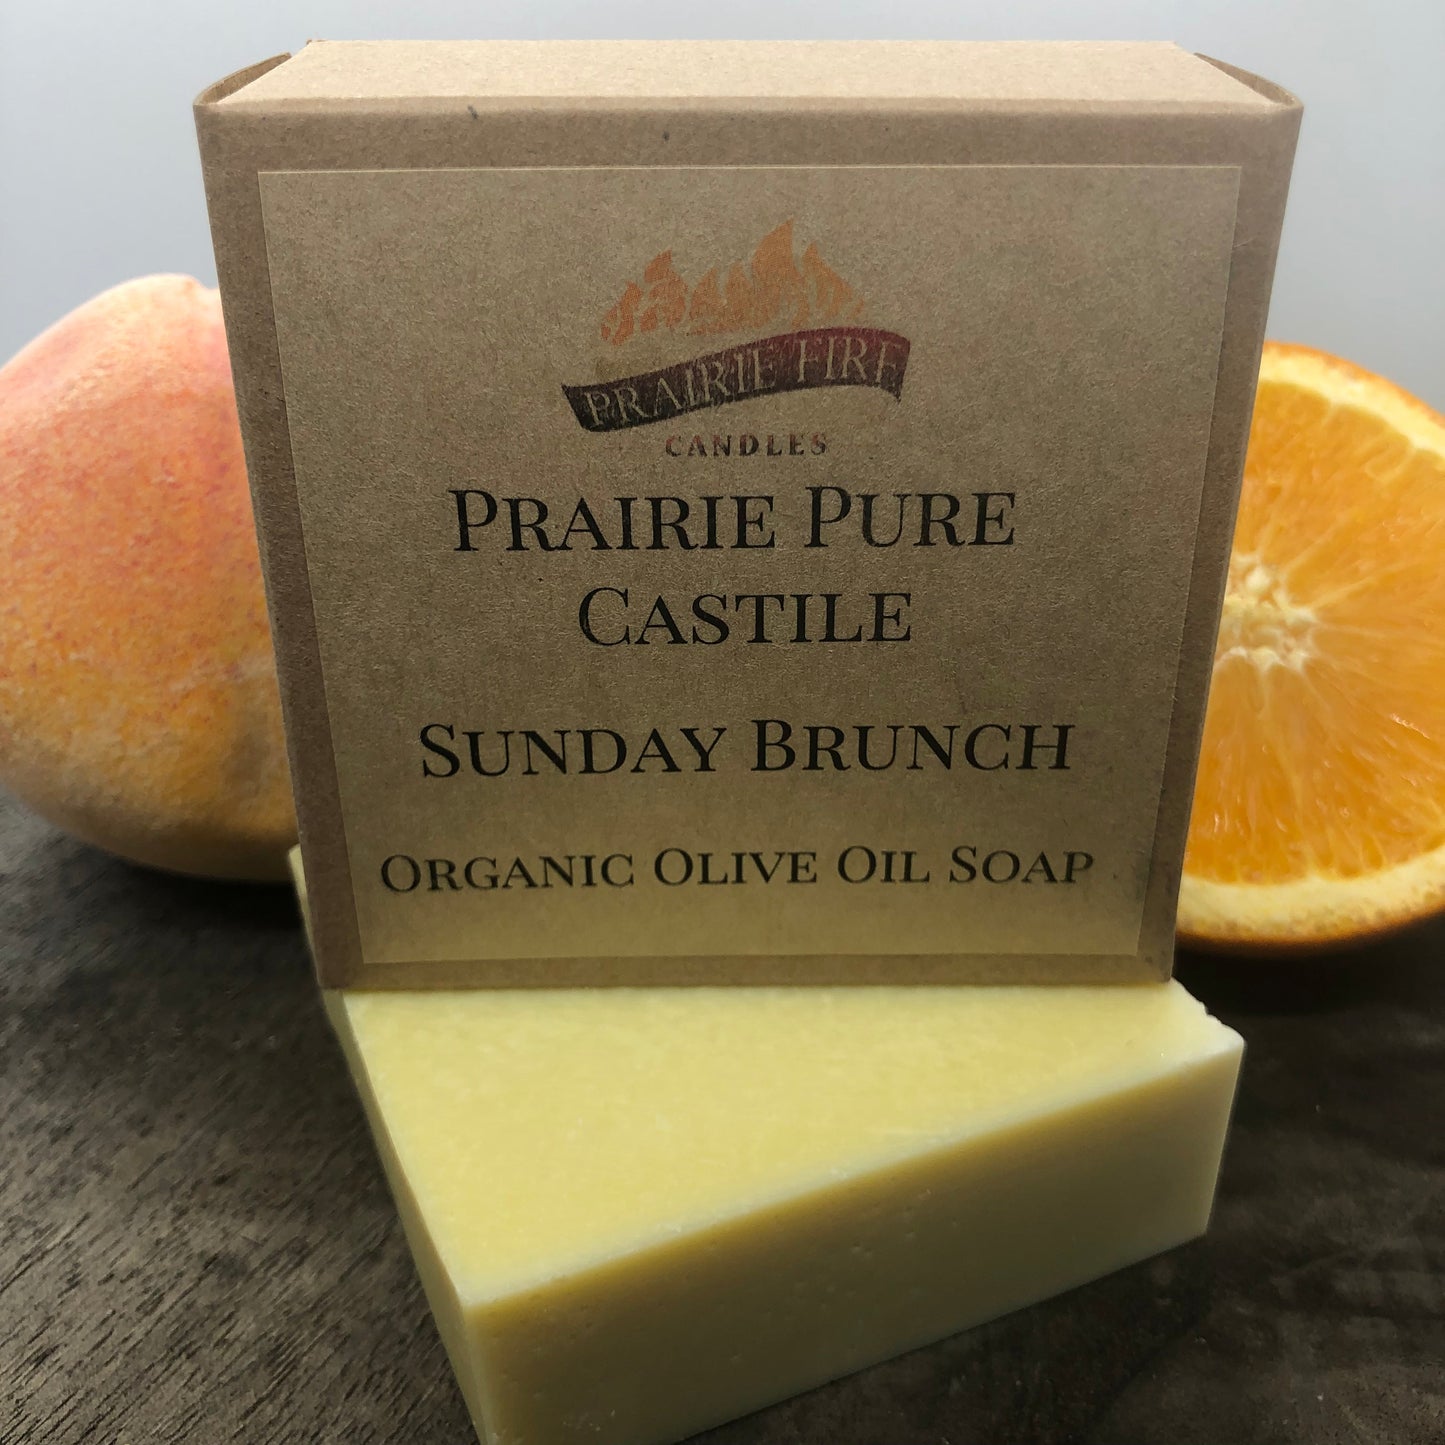 Sunday Brunch Real Castile Organic Olive Oil Soap for Sensitive Skin - Dye Free - 100% Certified Organic Extra Virgin Olive Oil